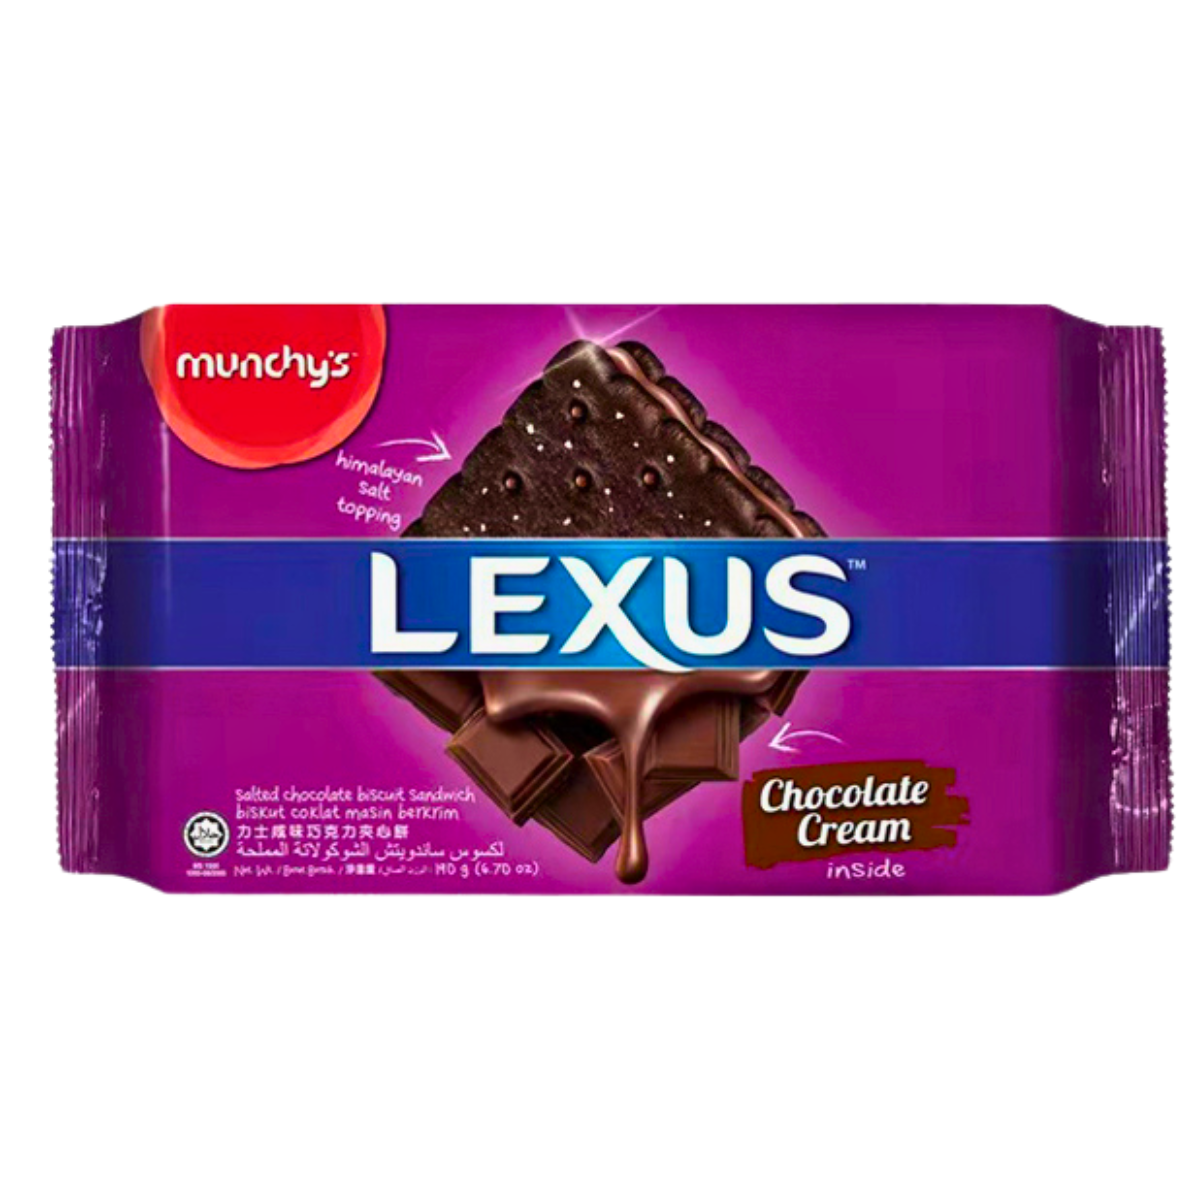 Munchys Lexus Chocolate Cream 190g